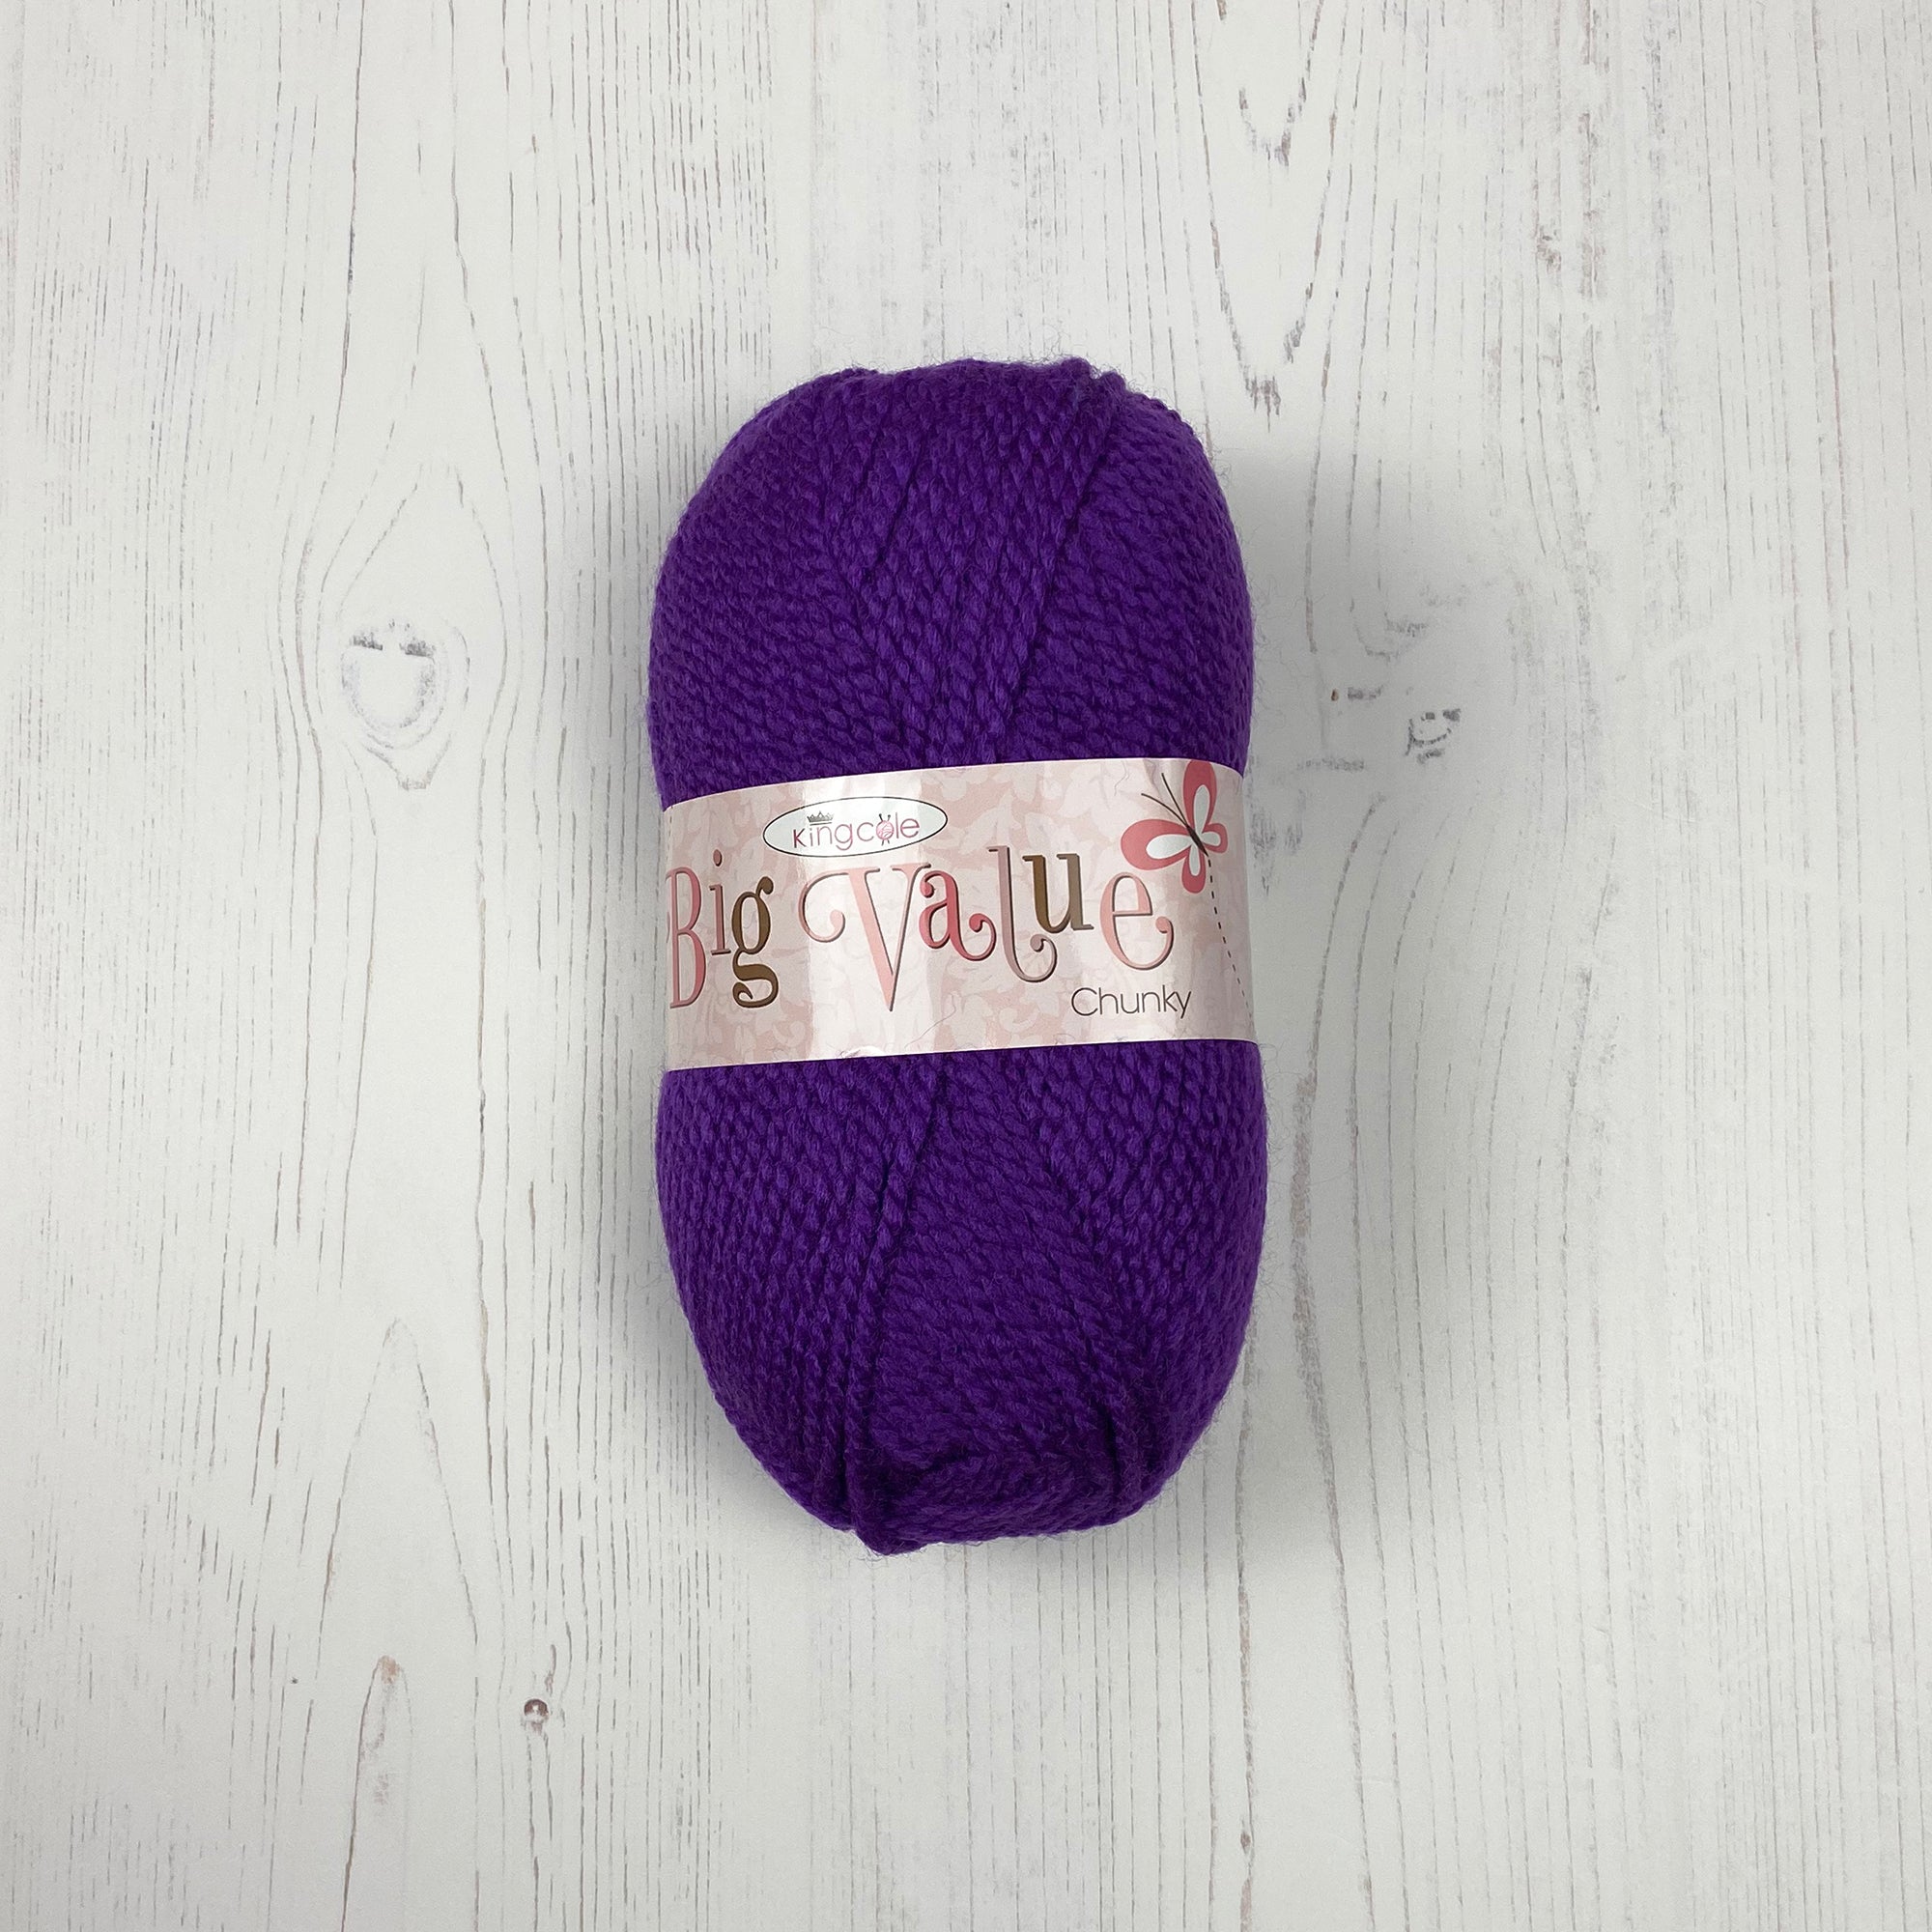 Chunky Yarn: Big Value Chunky in Purple, 100g – YardandYarn